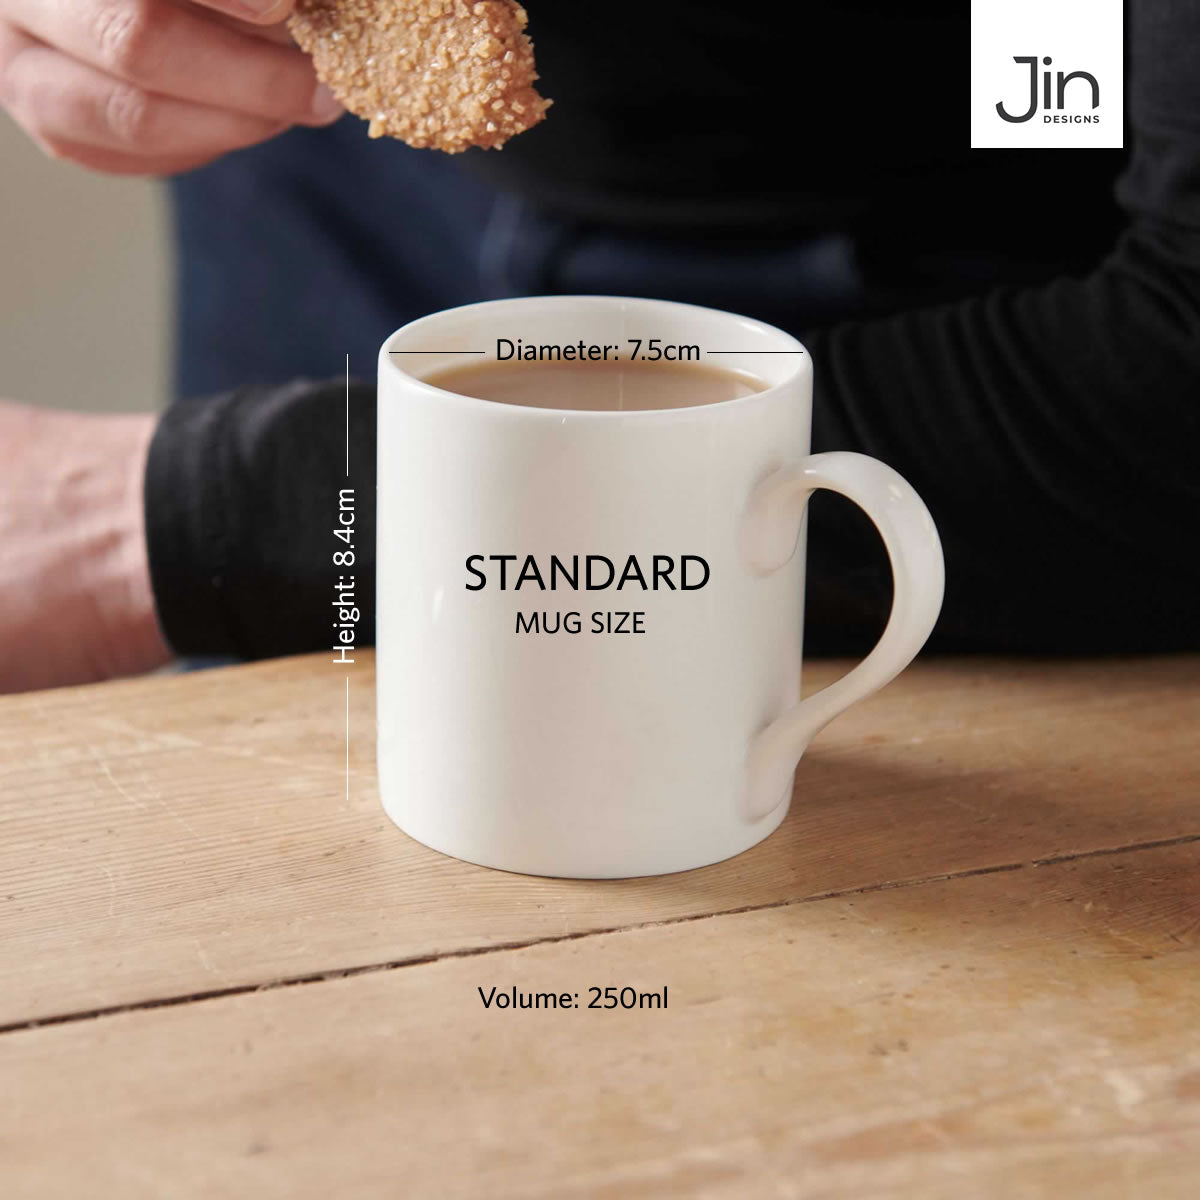 Mug Size - Standard